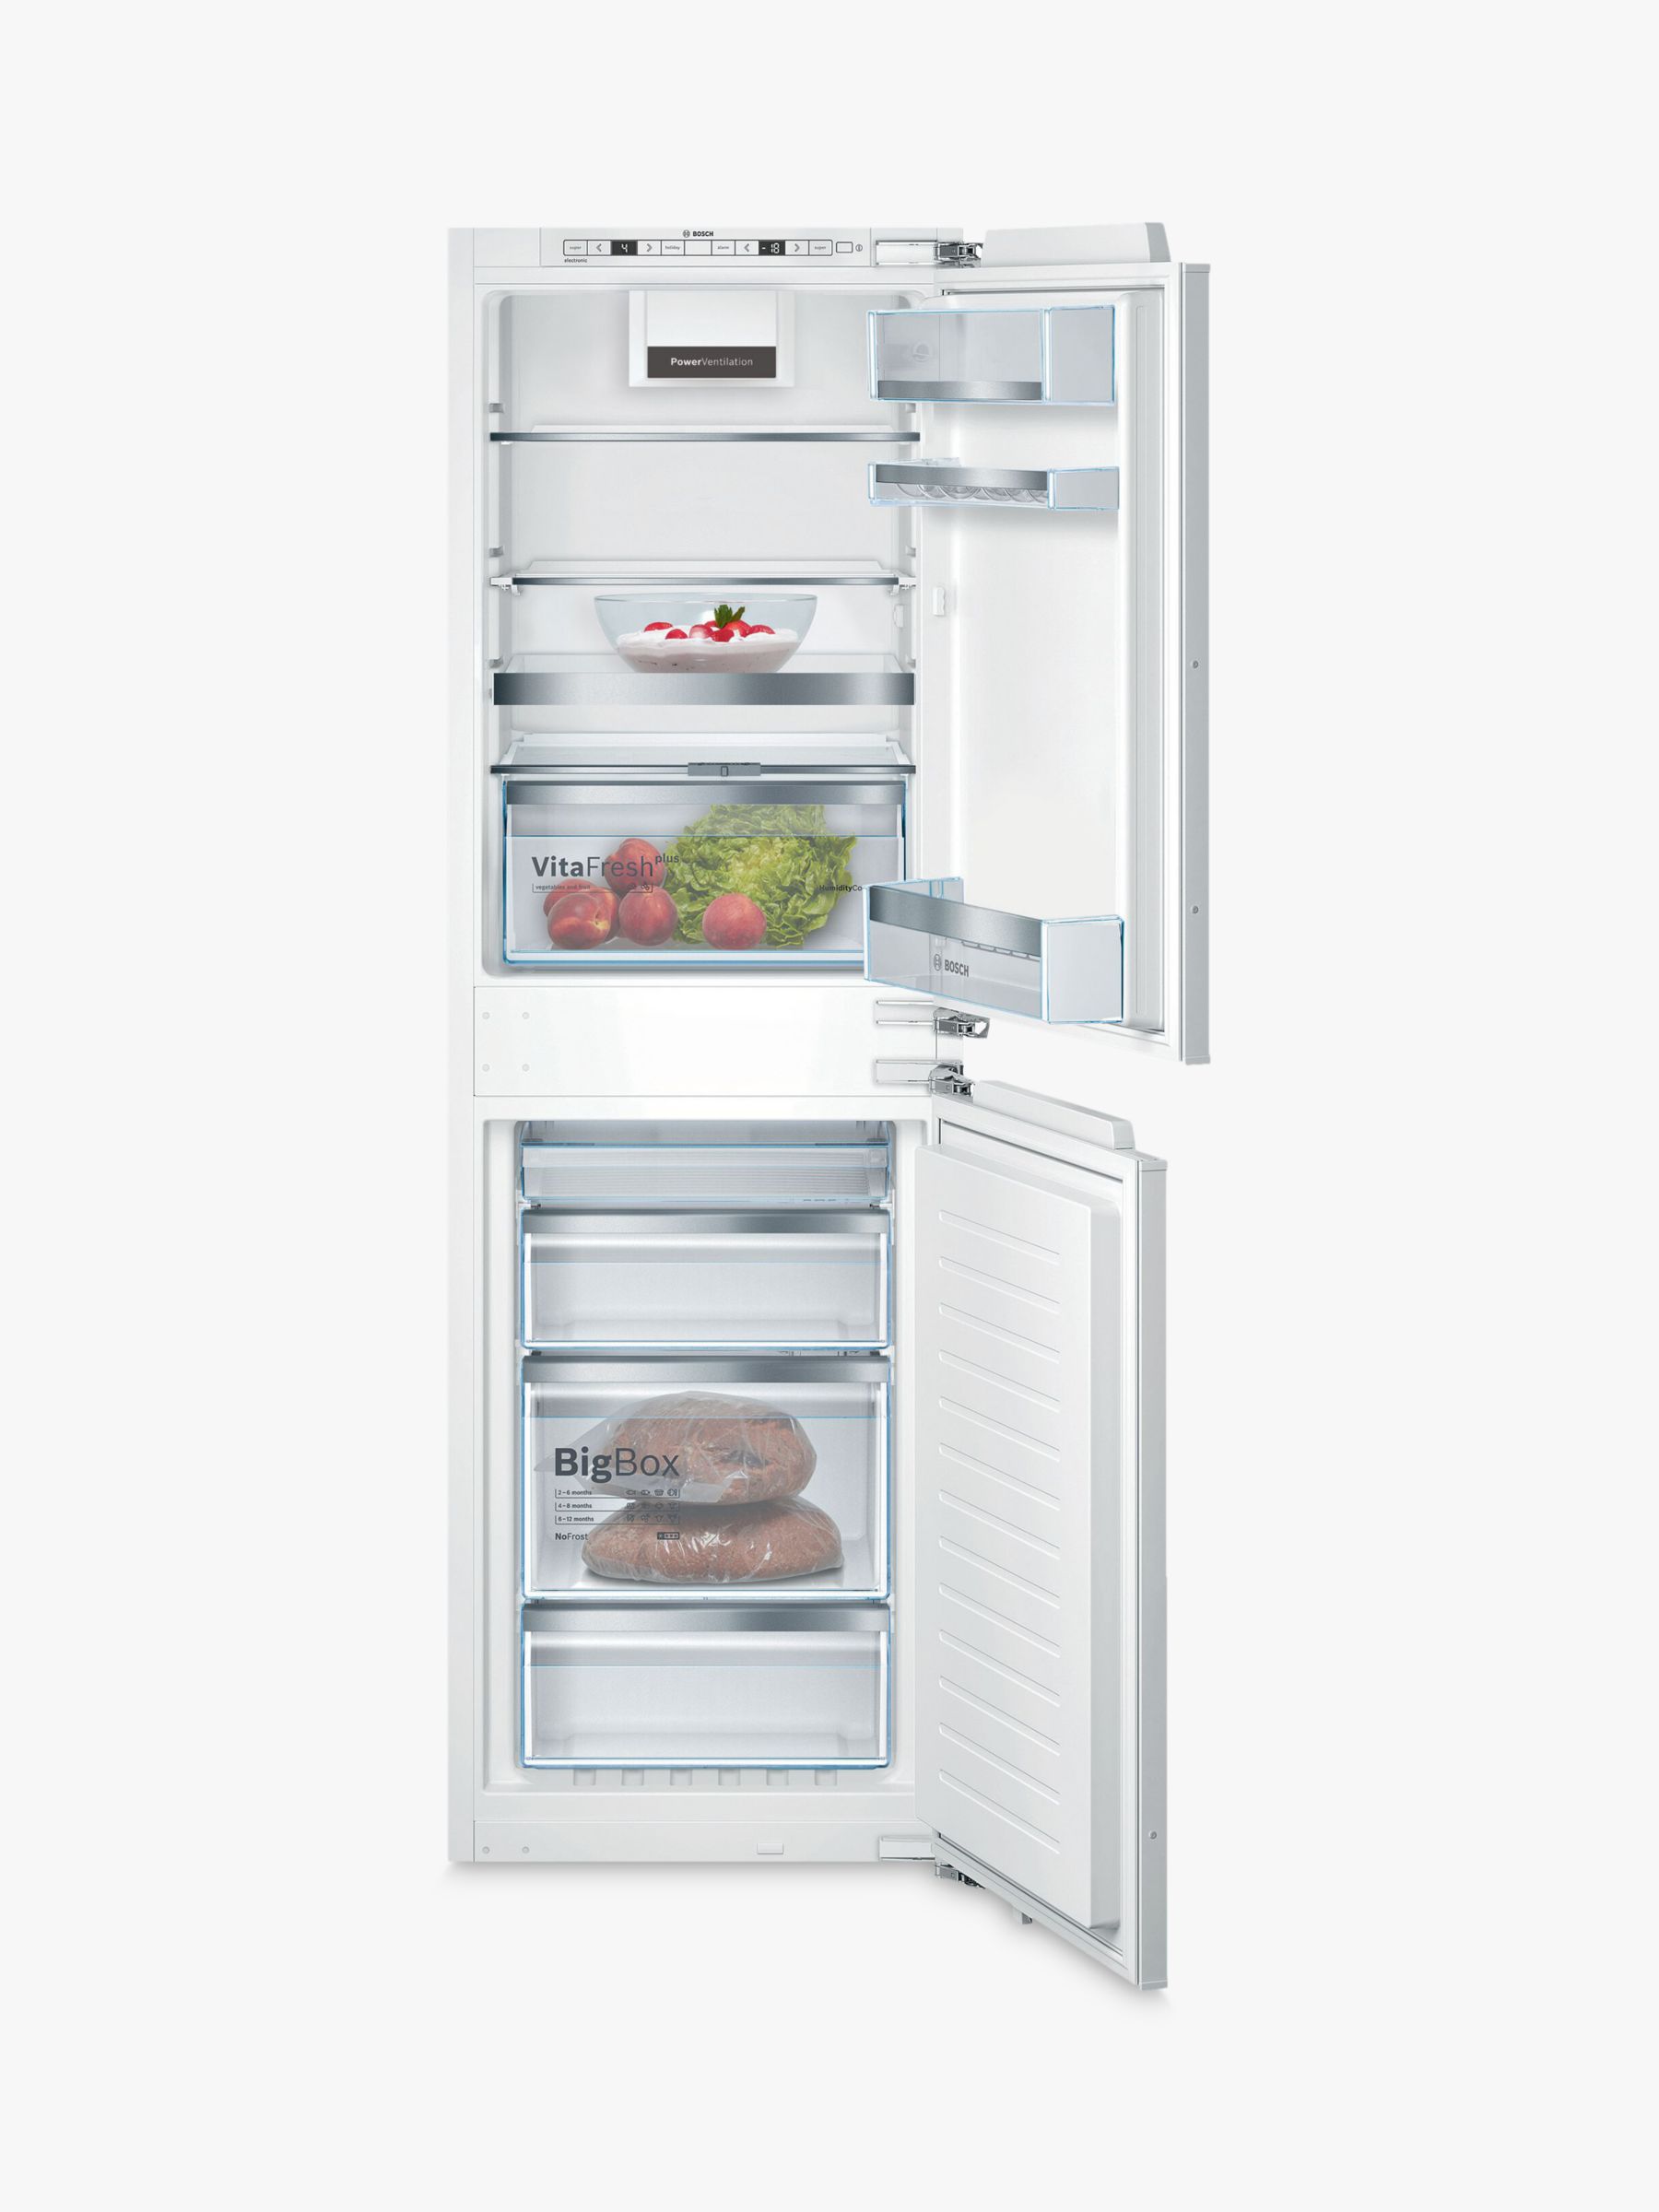 10+ John lewis integrated fridge freezer sale ideas